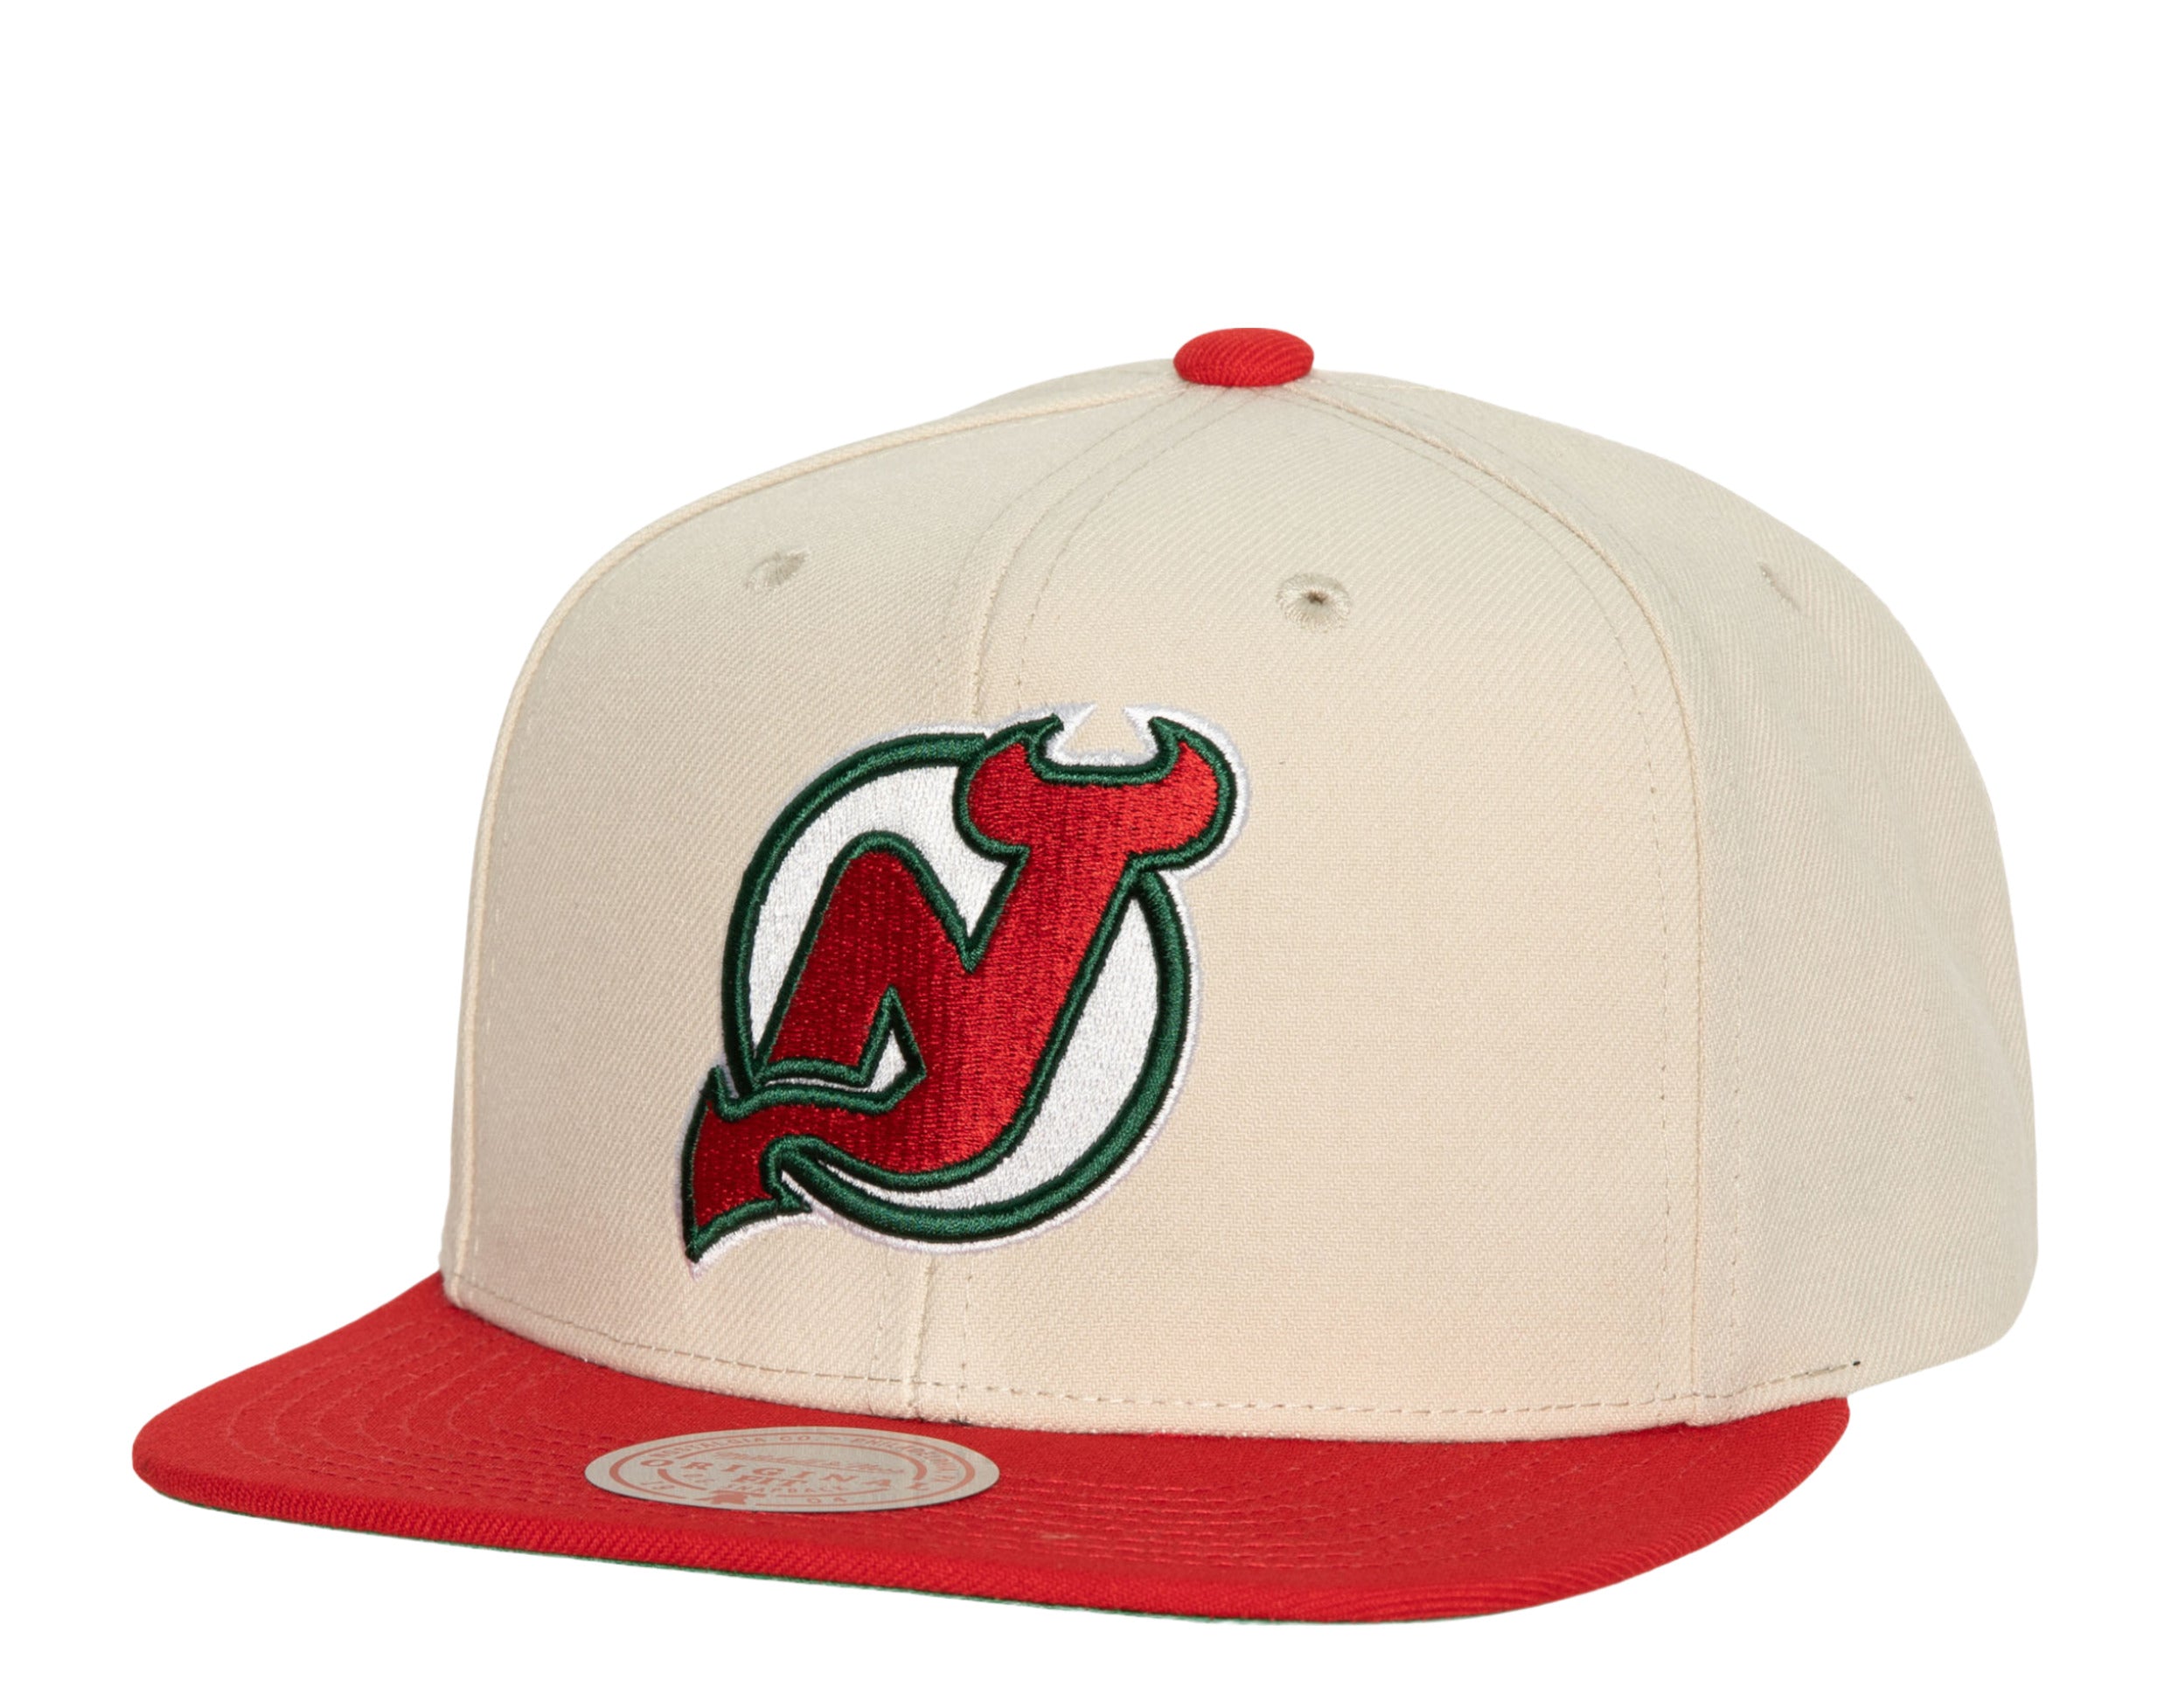 Mitchell & Ness NHL New Jersey Devils Vintage Cream Snapback Hat